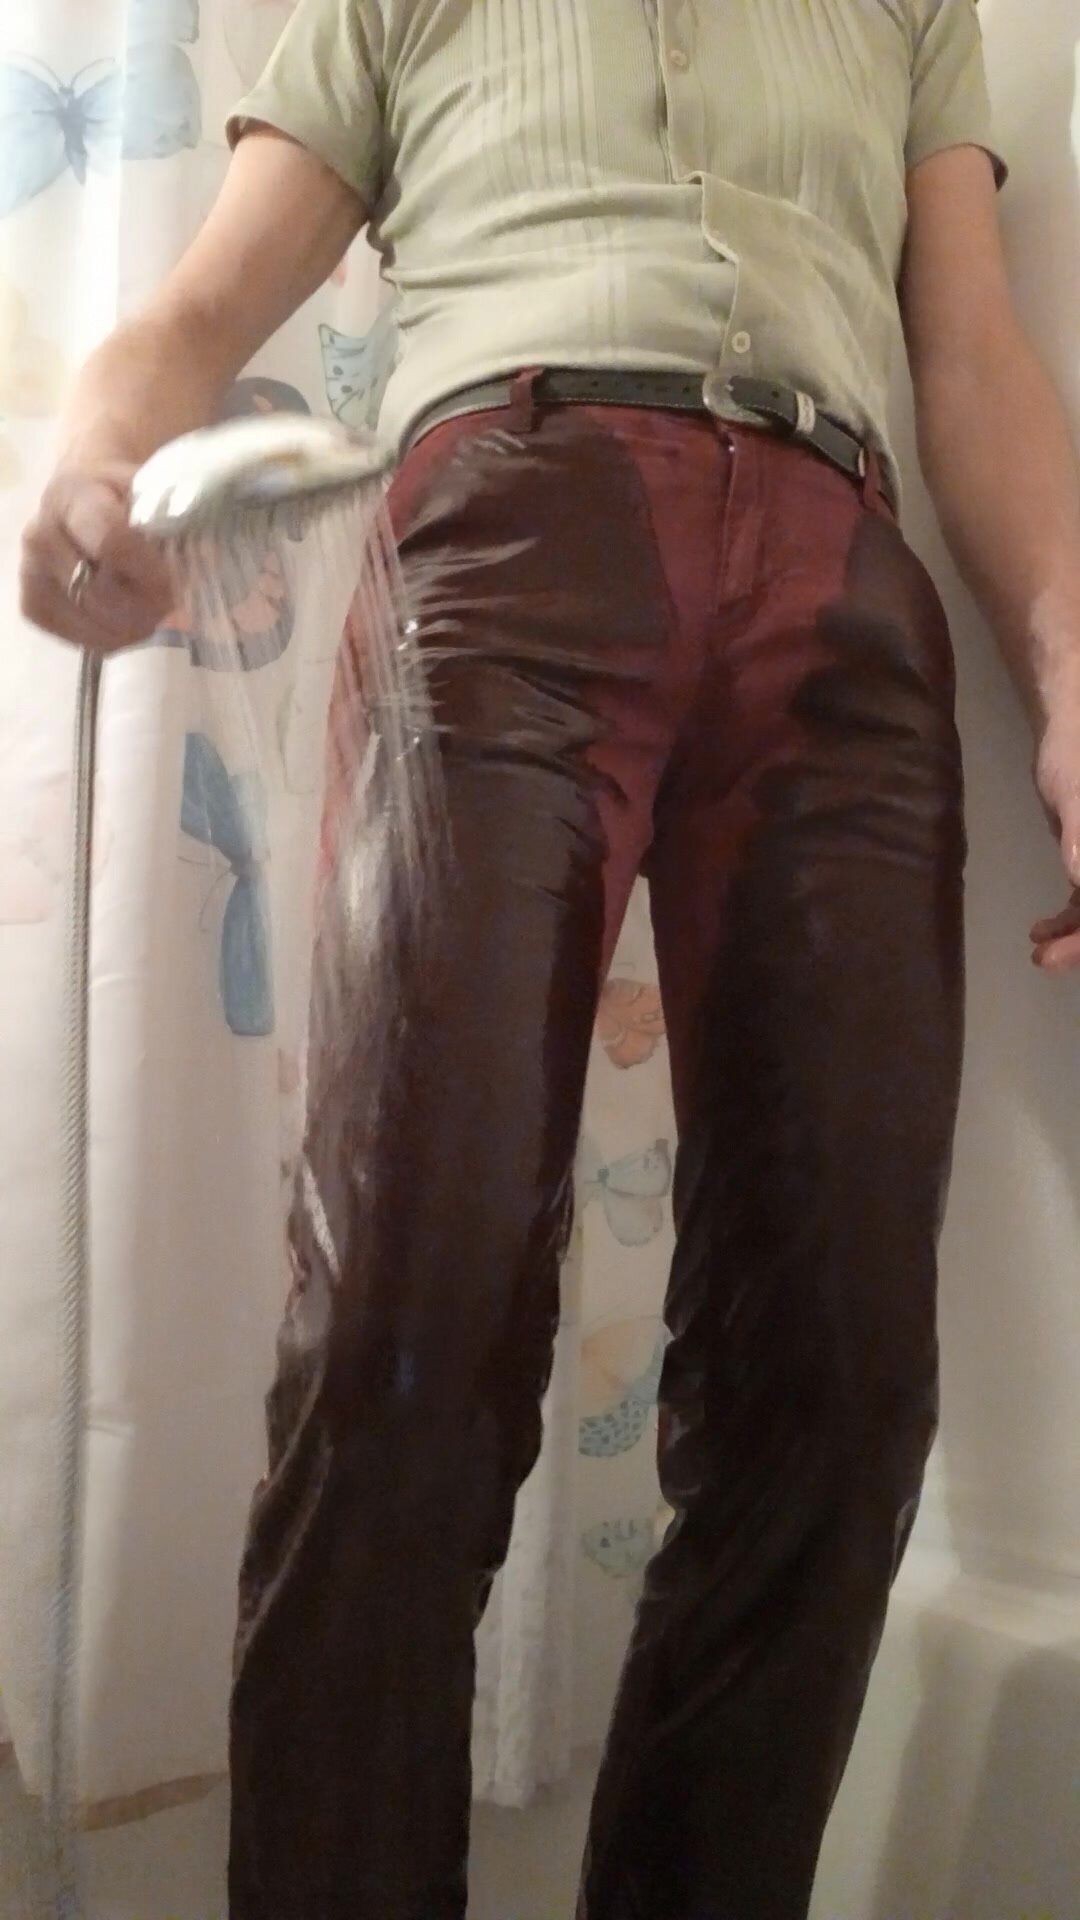 Jeans shower